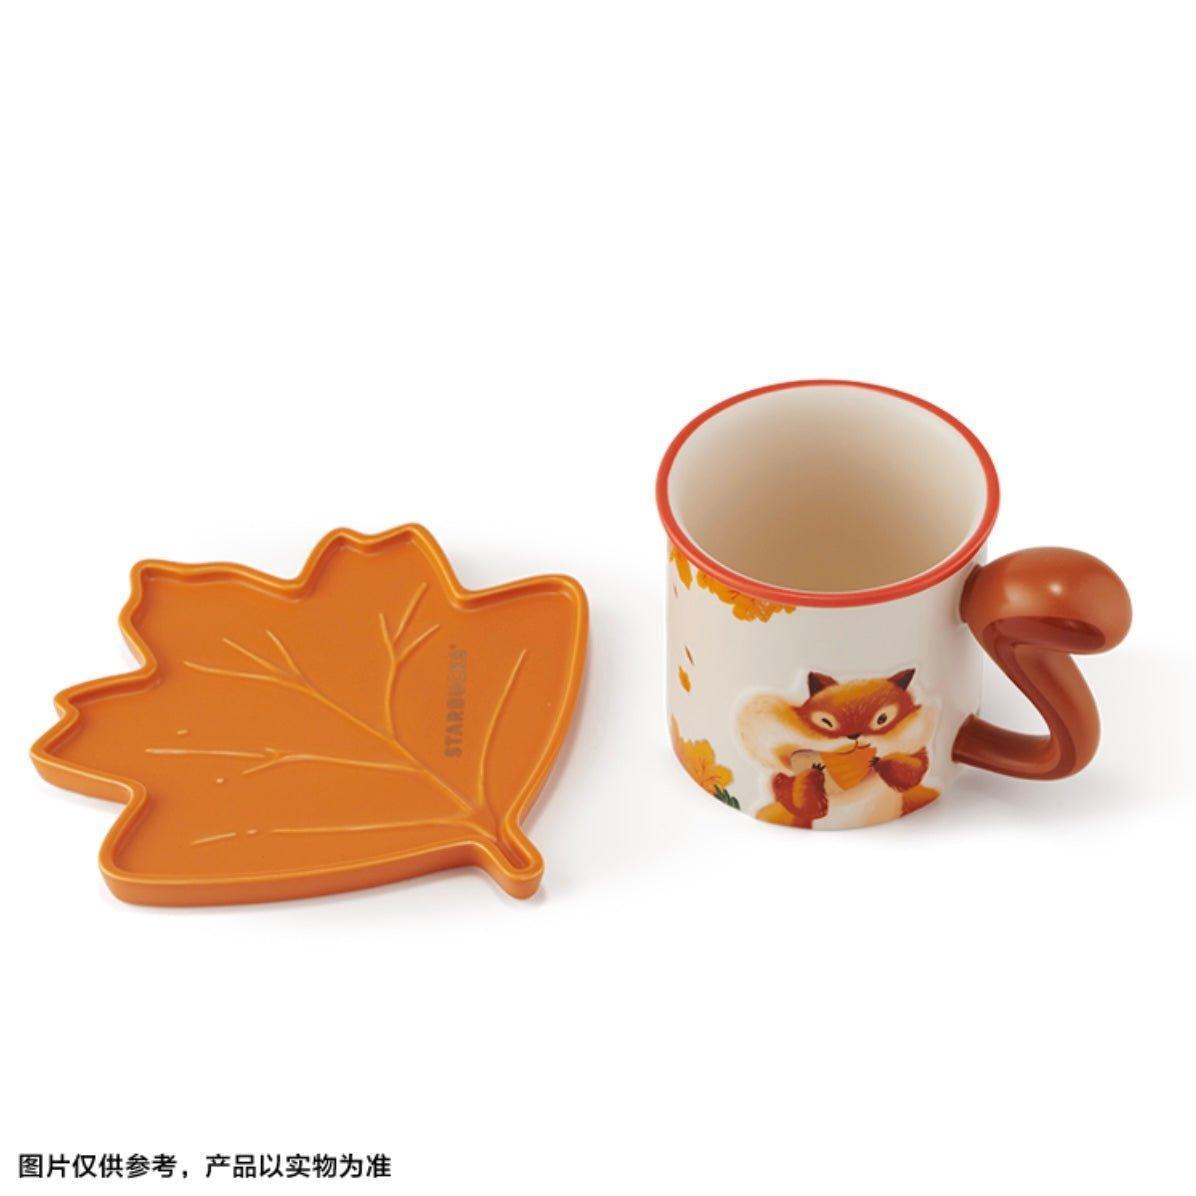 360ml/12oz Squirrel Maple Leaf Shape Ceramic Cup and Plate Set (Starbucks Autumn Forest 2022) - Ann Ann Starbucks